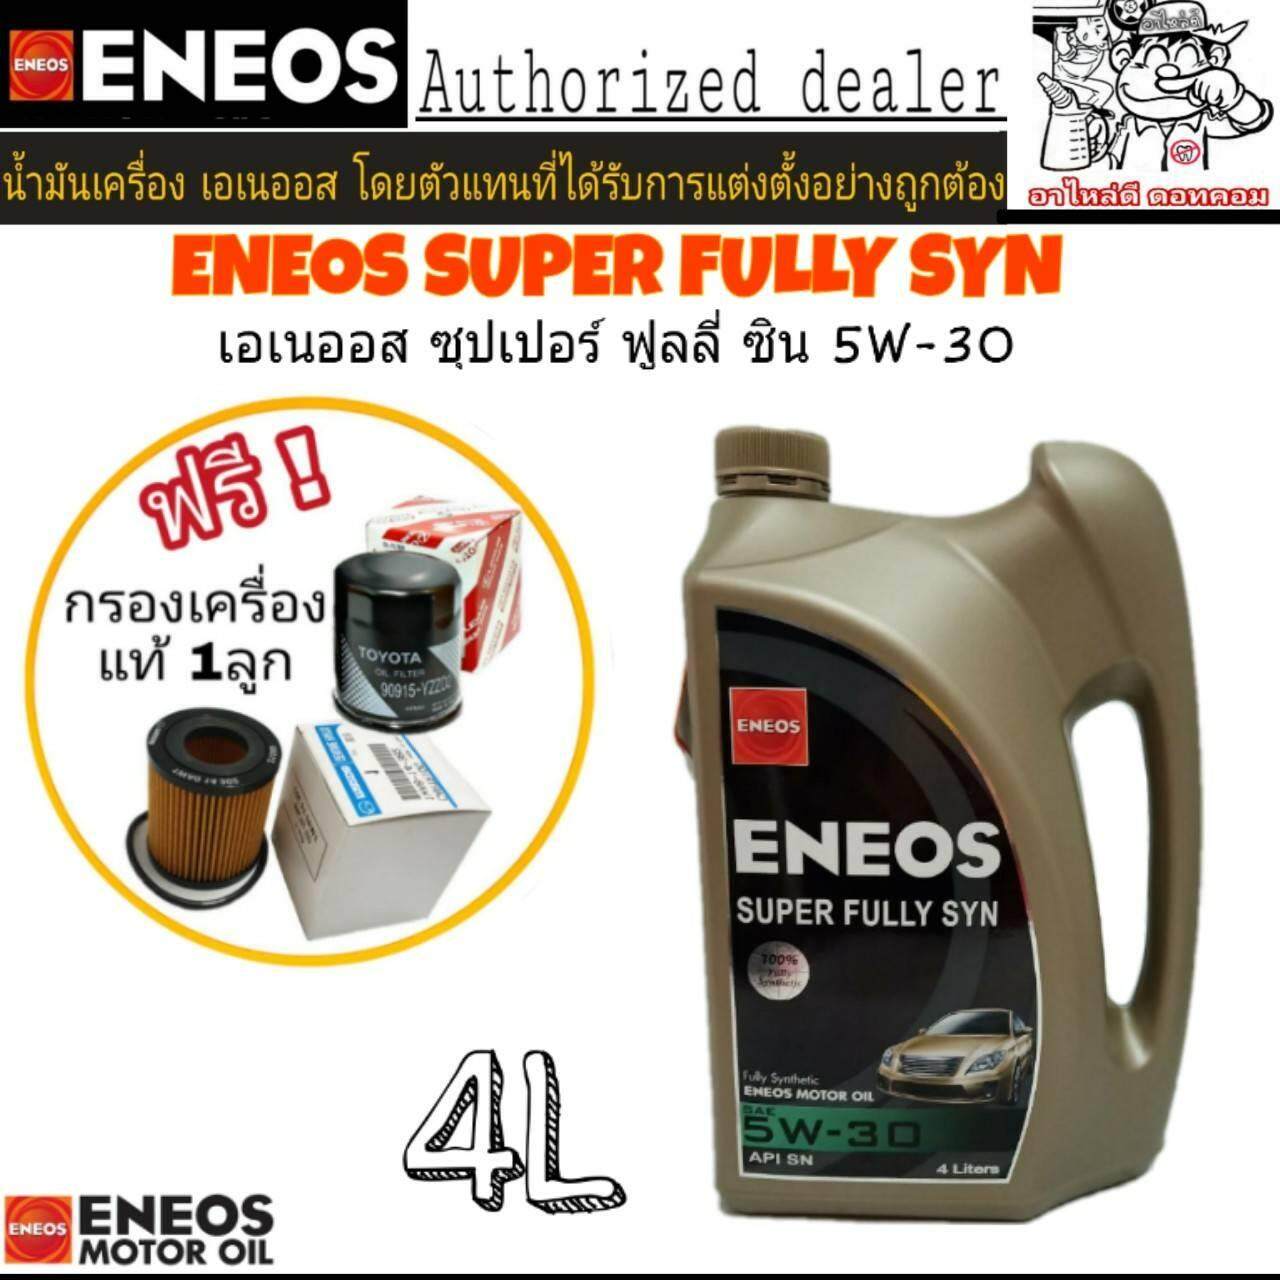 ENEOS SUPER FULLY SYN 5W-30 4L. เบนซิน สังเคราะห์แท้ 100% แถมฟรีใส้กรองน้ำมันเครื่องแท้ 1ลูก (ทักแชทแจ้งรุ่นรถ) +เสื้อ